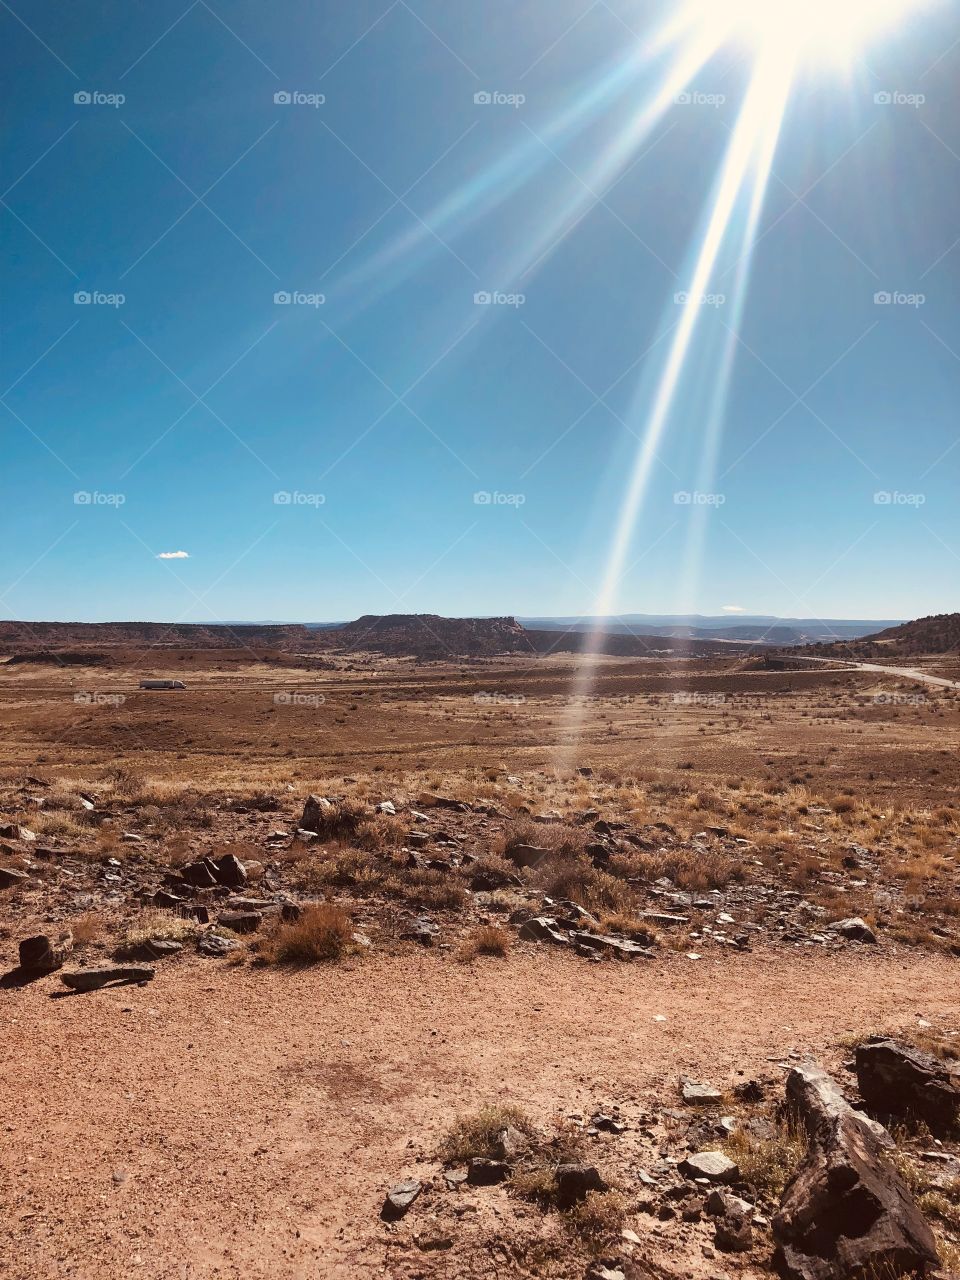 Alone in the high desert